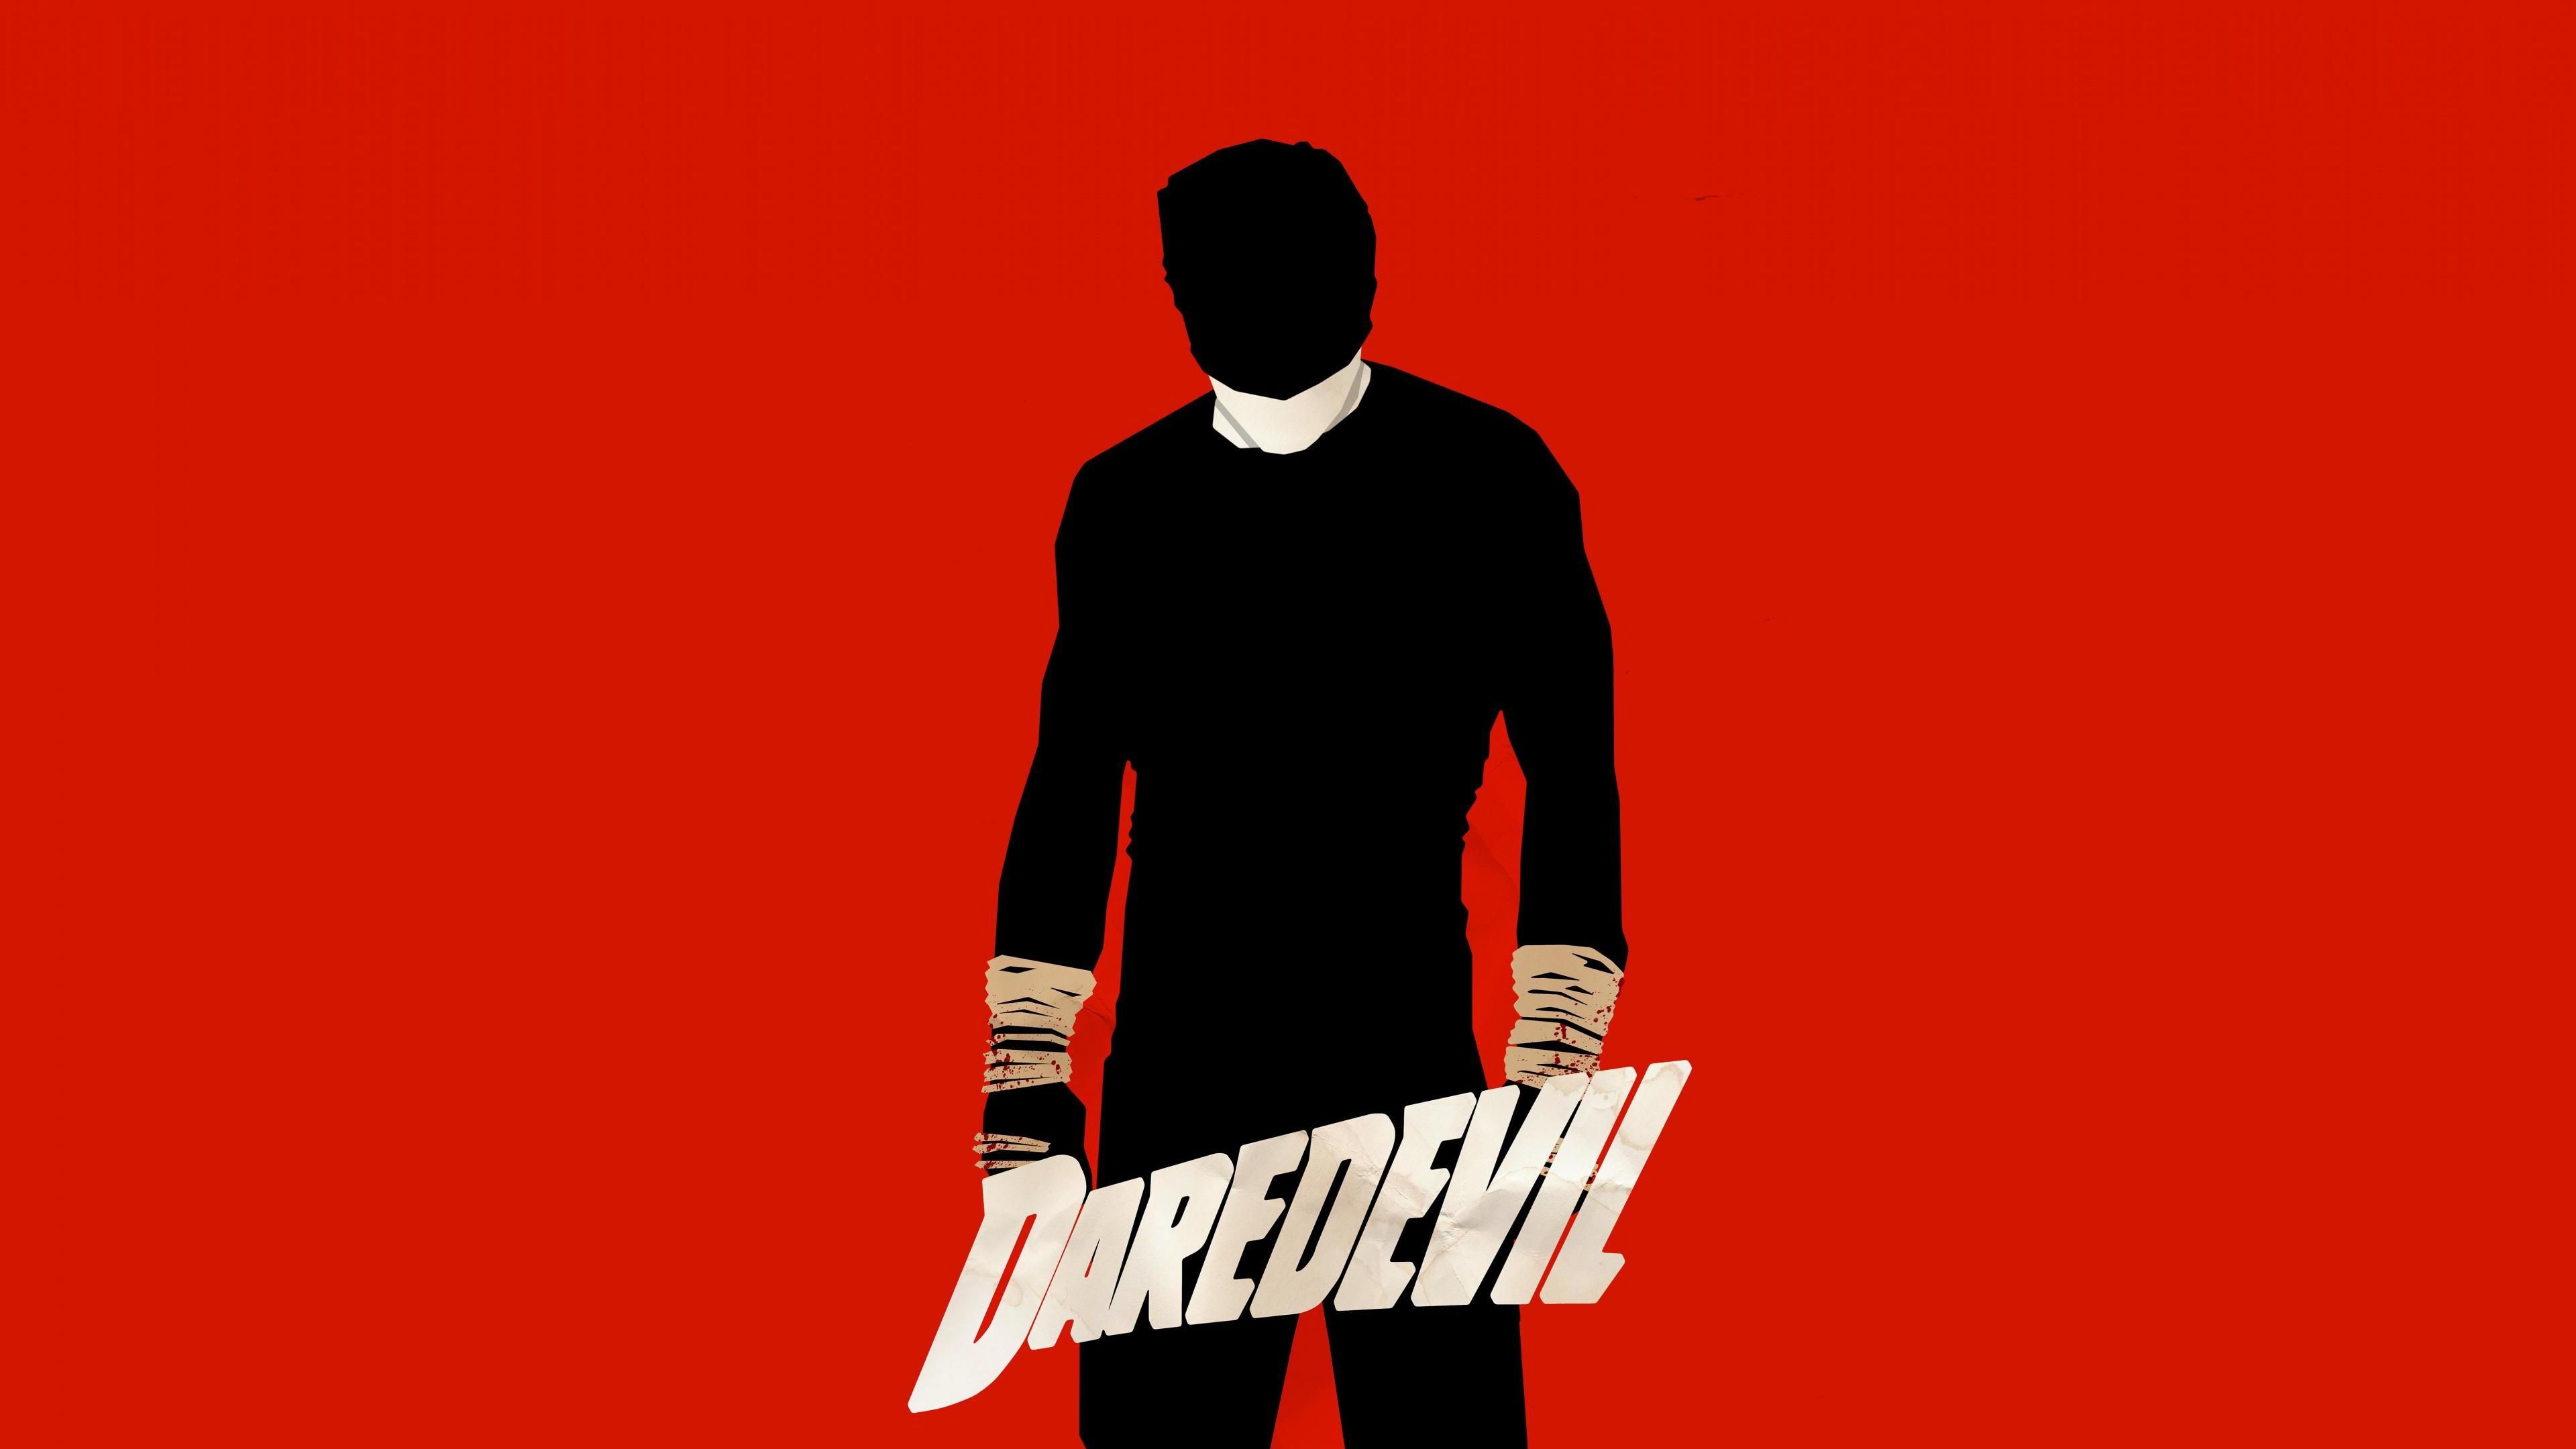 Daredevil Abstract Art 4k superheroes wallpaper, digital art wallpaper, daredevil wallpaper, artwork wallpaper,. Daredevil, Comic movies, Superhero wallpaper